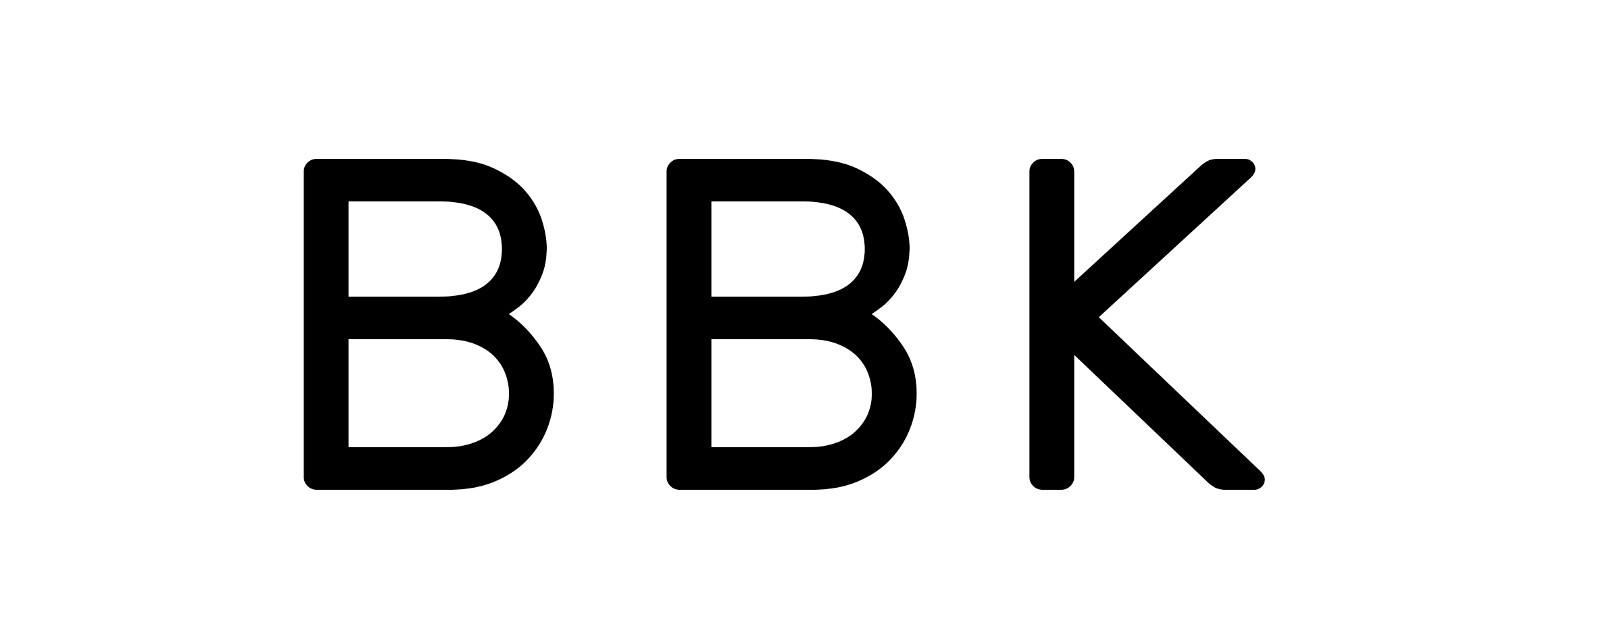 BBK Logo - How to see your Brickblock Token balance in your Ethereum wallet